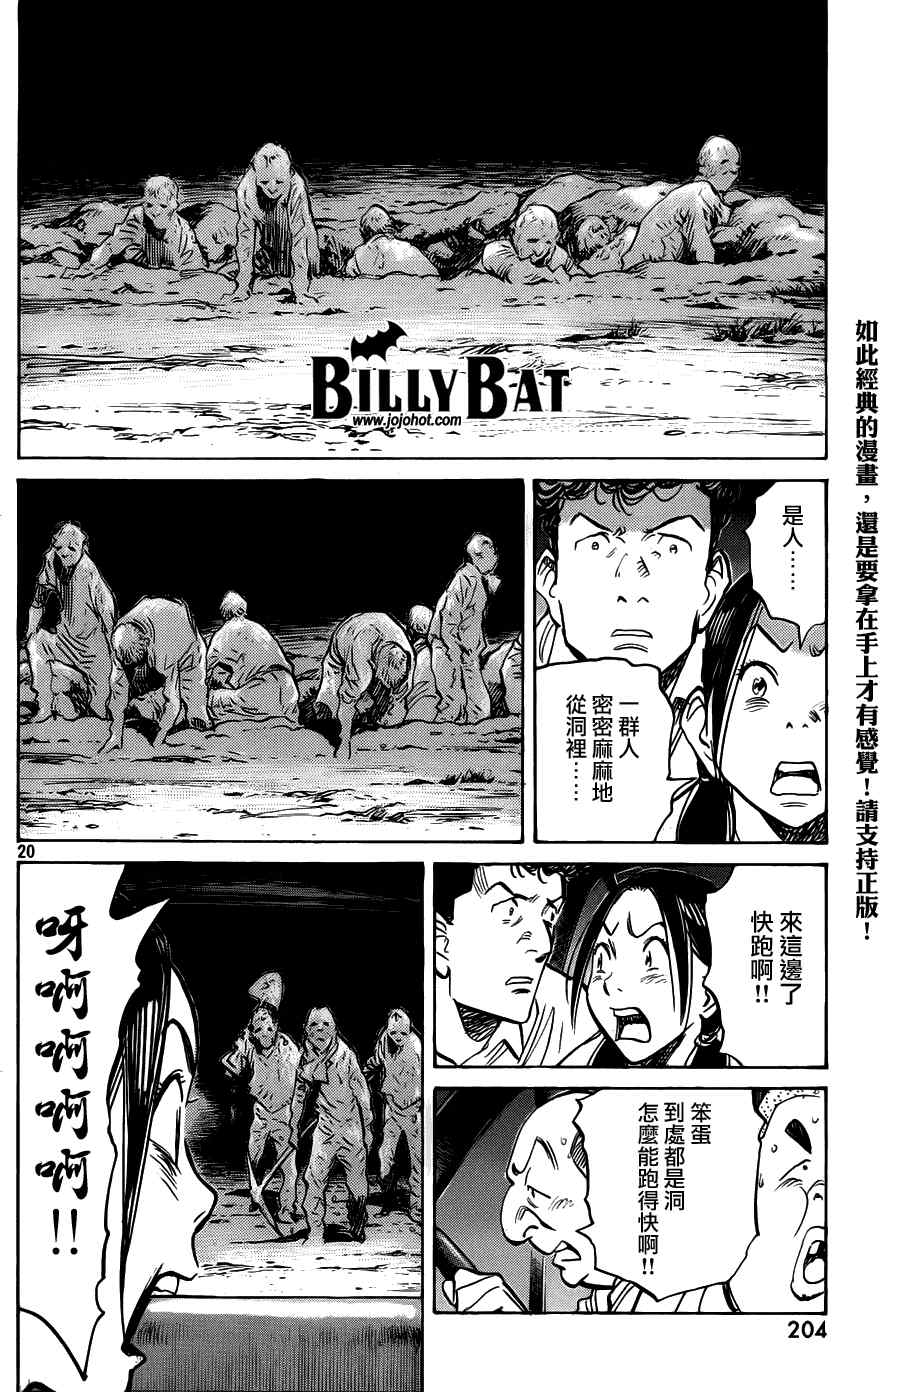 Billy_Bat - 第76話 - 5